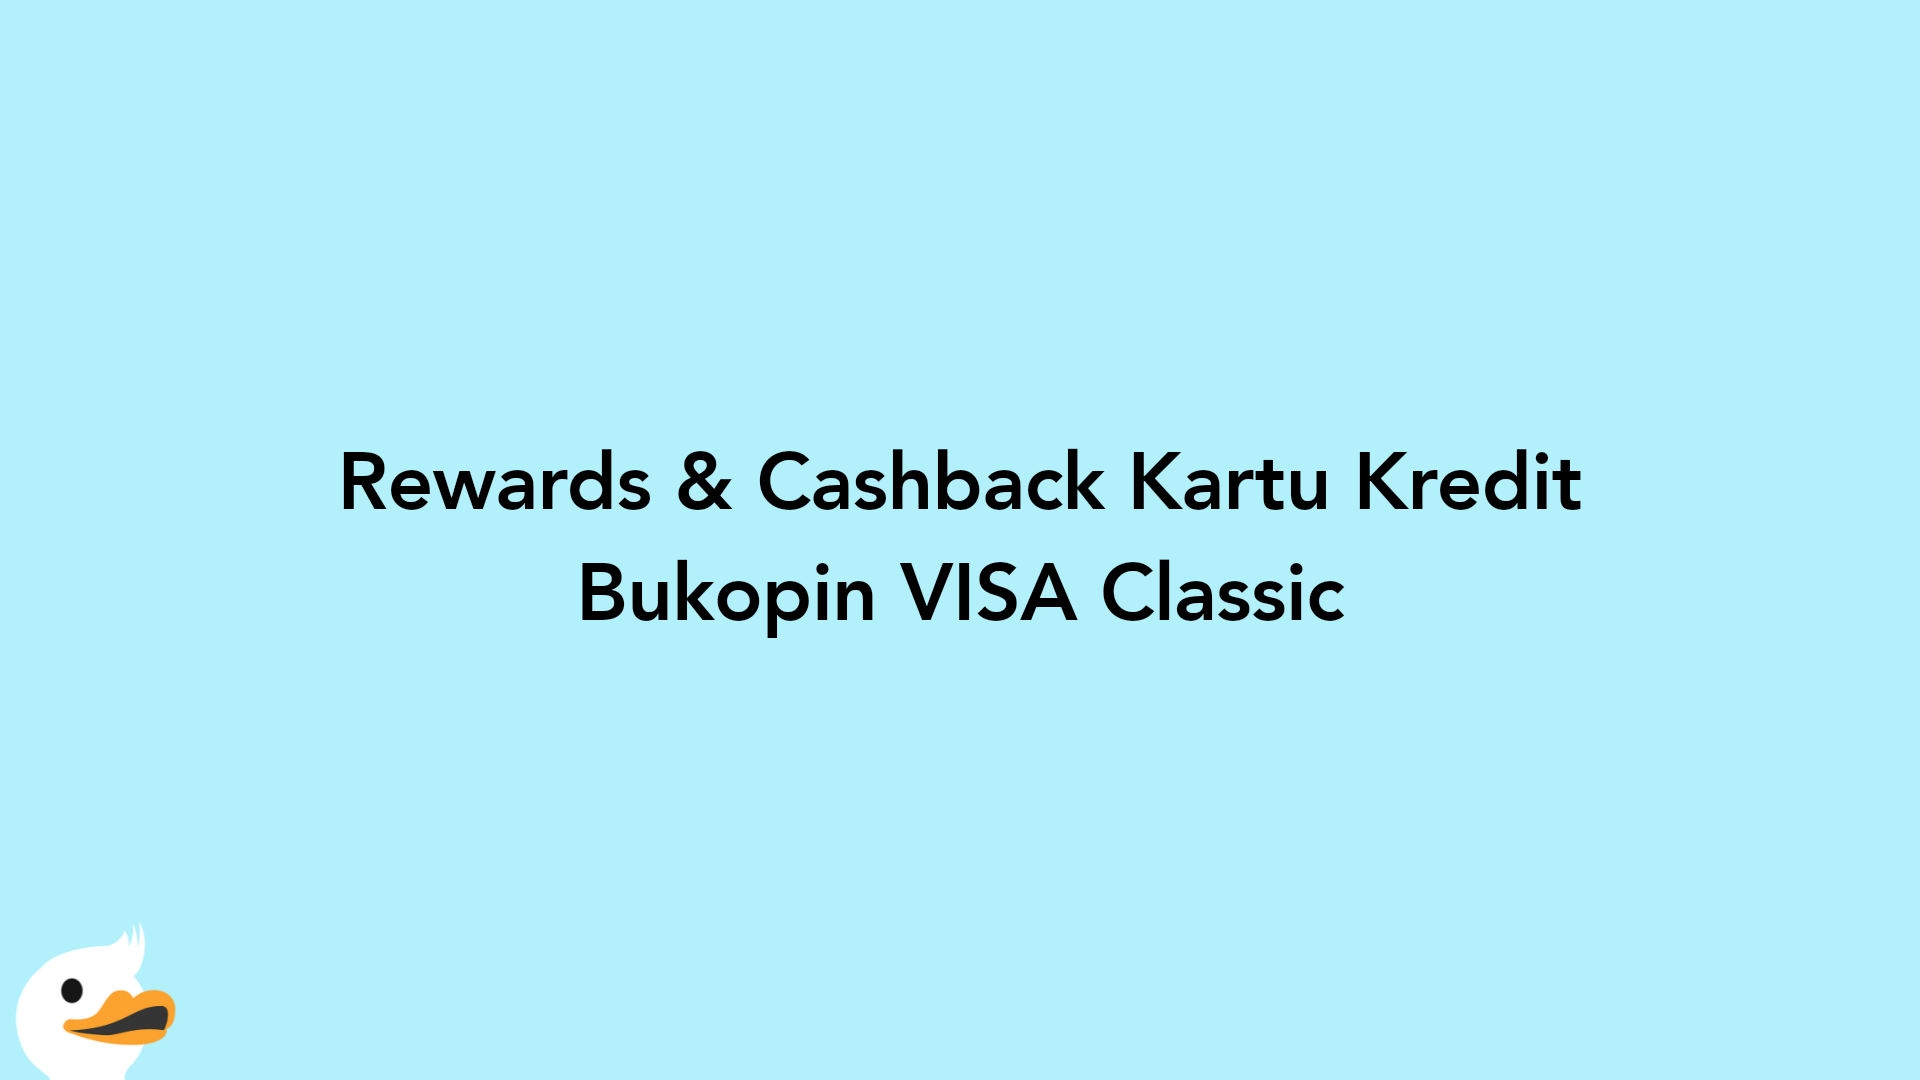 Rewards & Cashback Kartu Kredit Bukopin VISA Classic